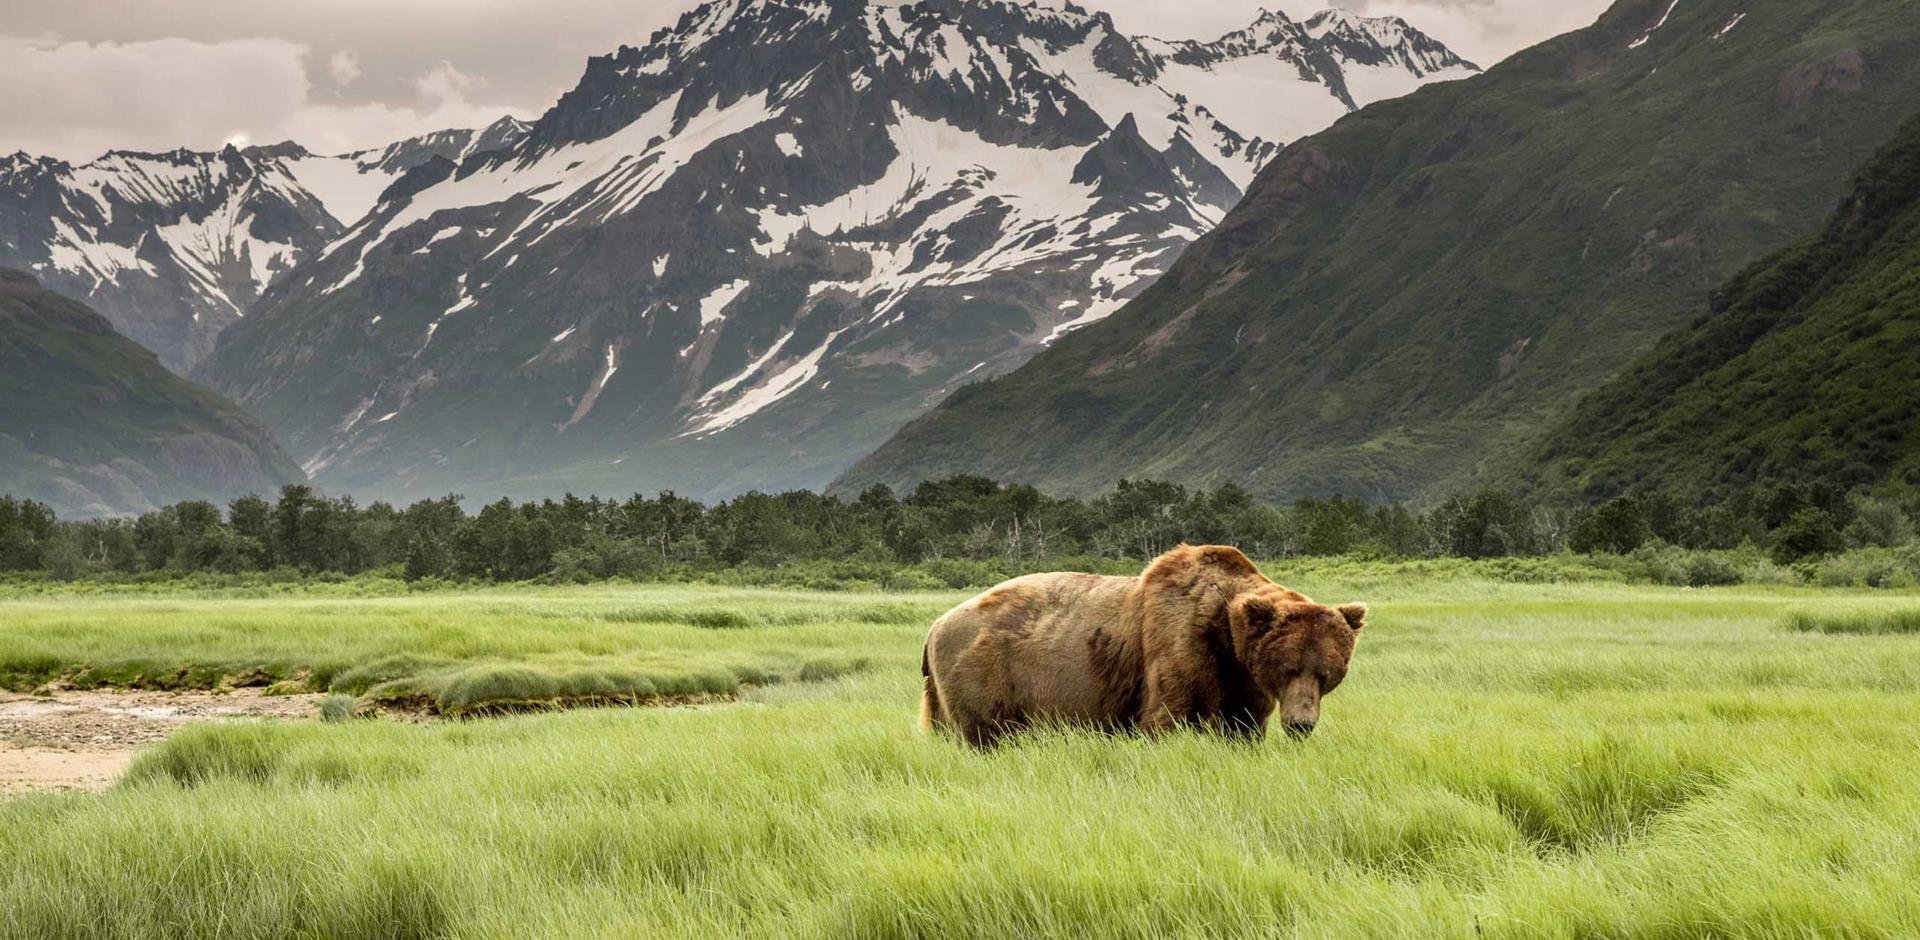 Grizzly bear, Alaska, USA